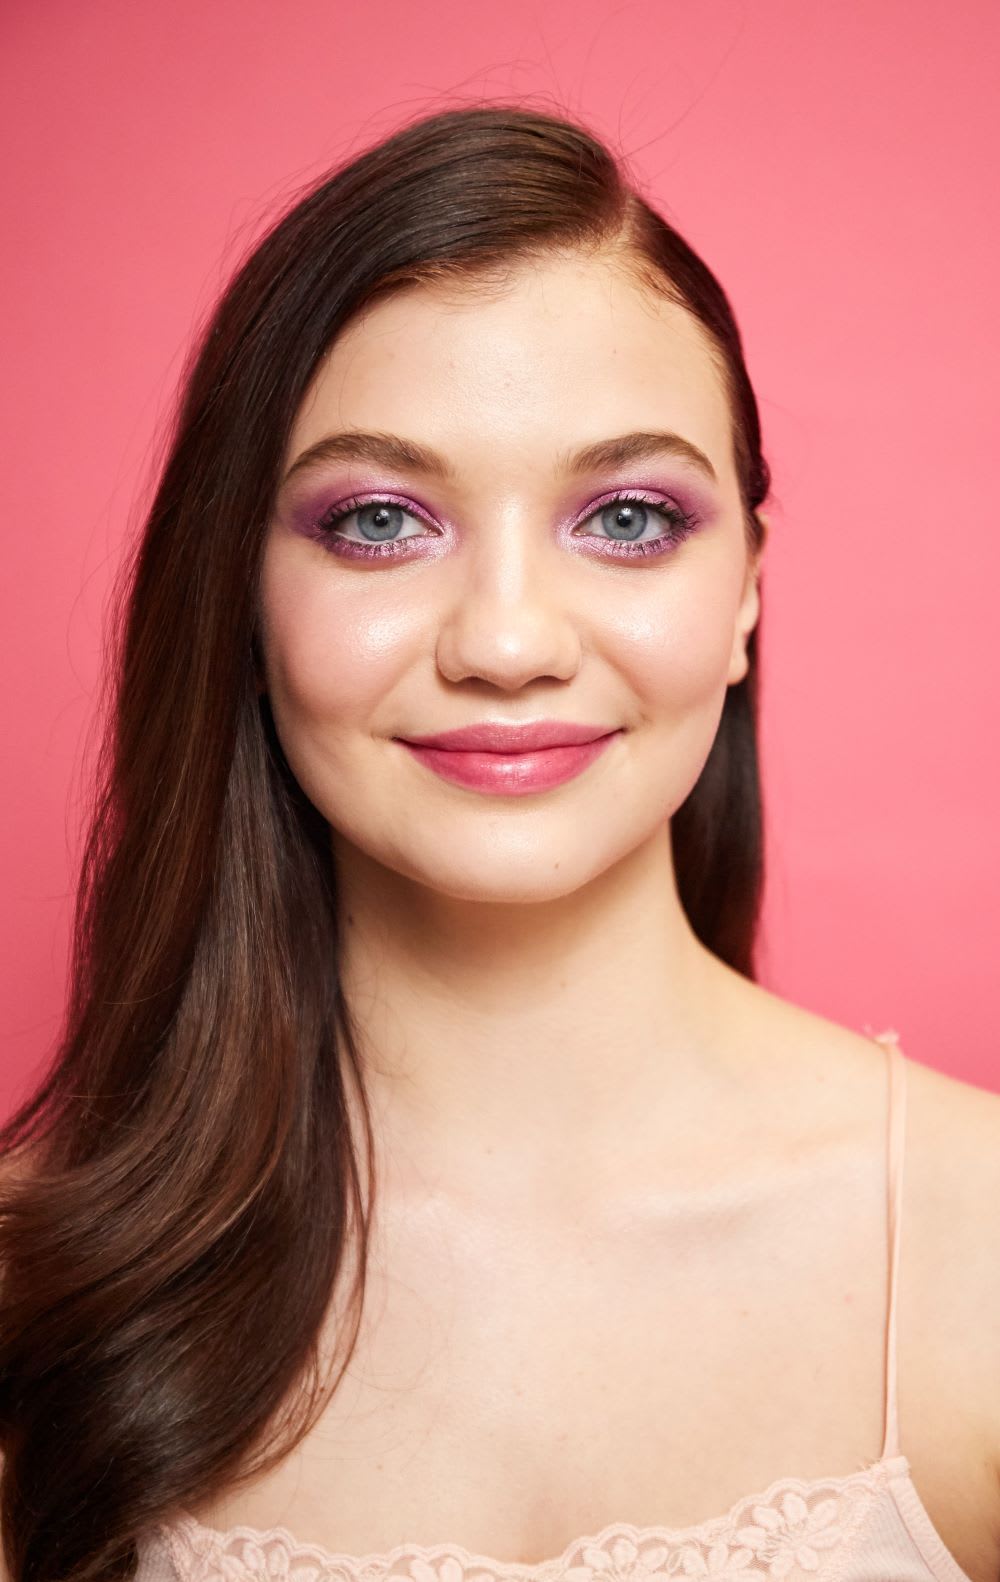 Prom Makeup Tutorial: Bold, Colorful Eyes - Lulus.com Fashion Blog